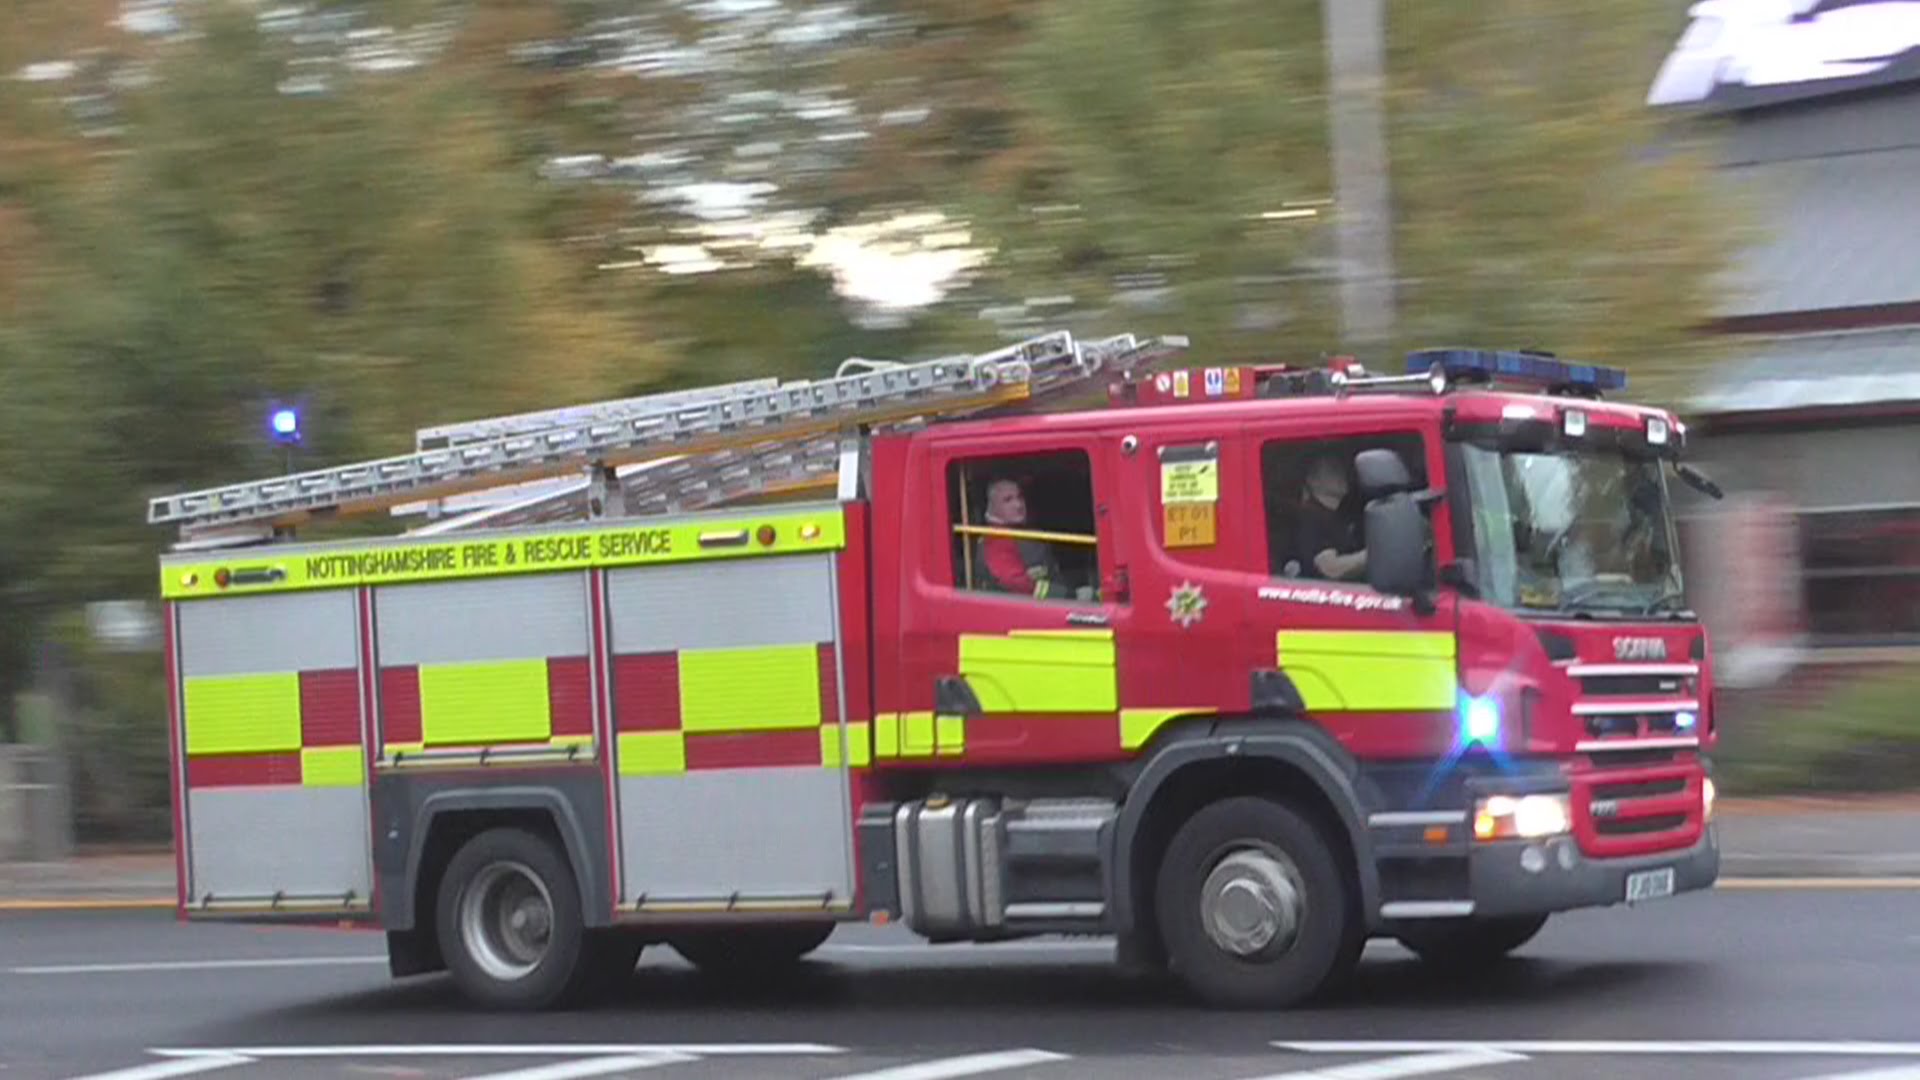 British fire engine responding + Police activity - YouTube